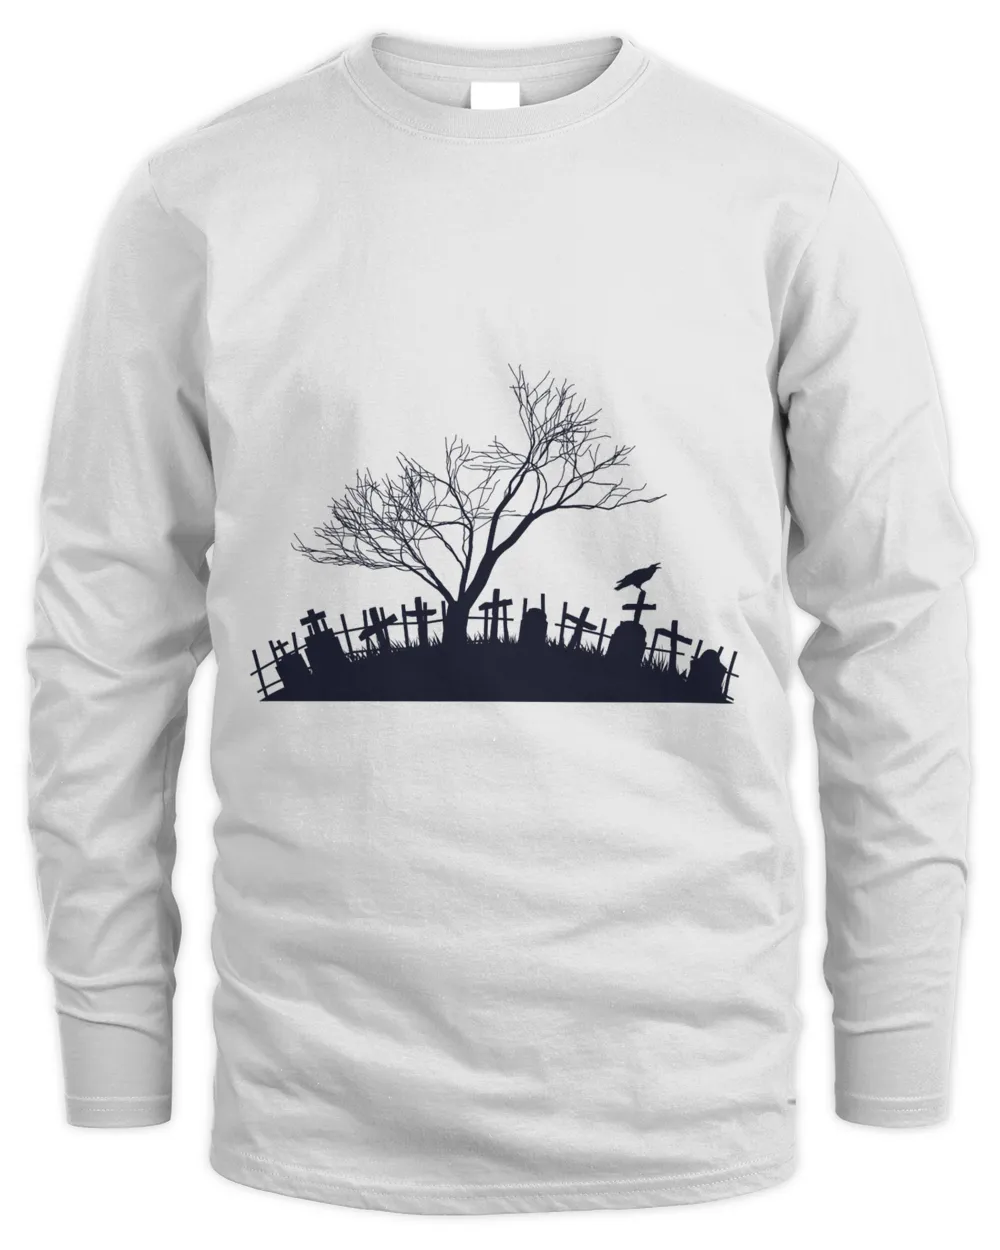 Spooky Cemetery t shirt hoodie sweater